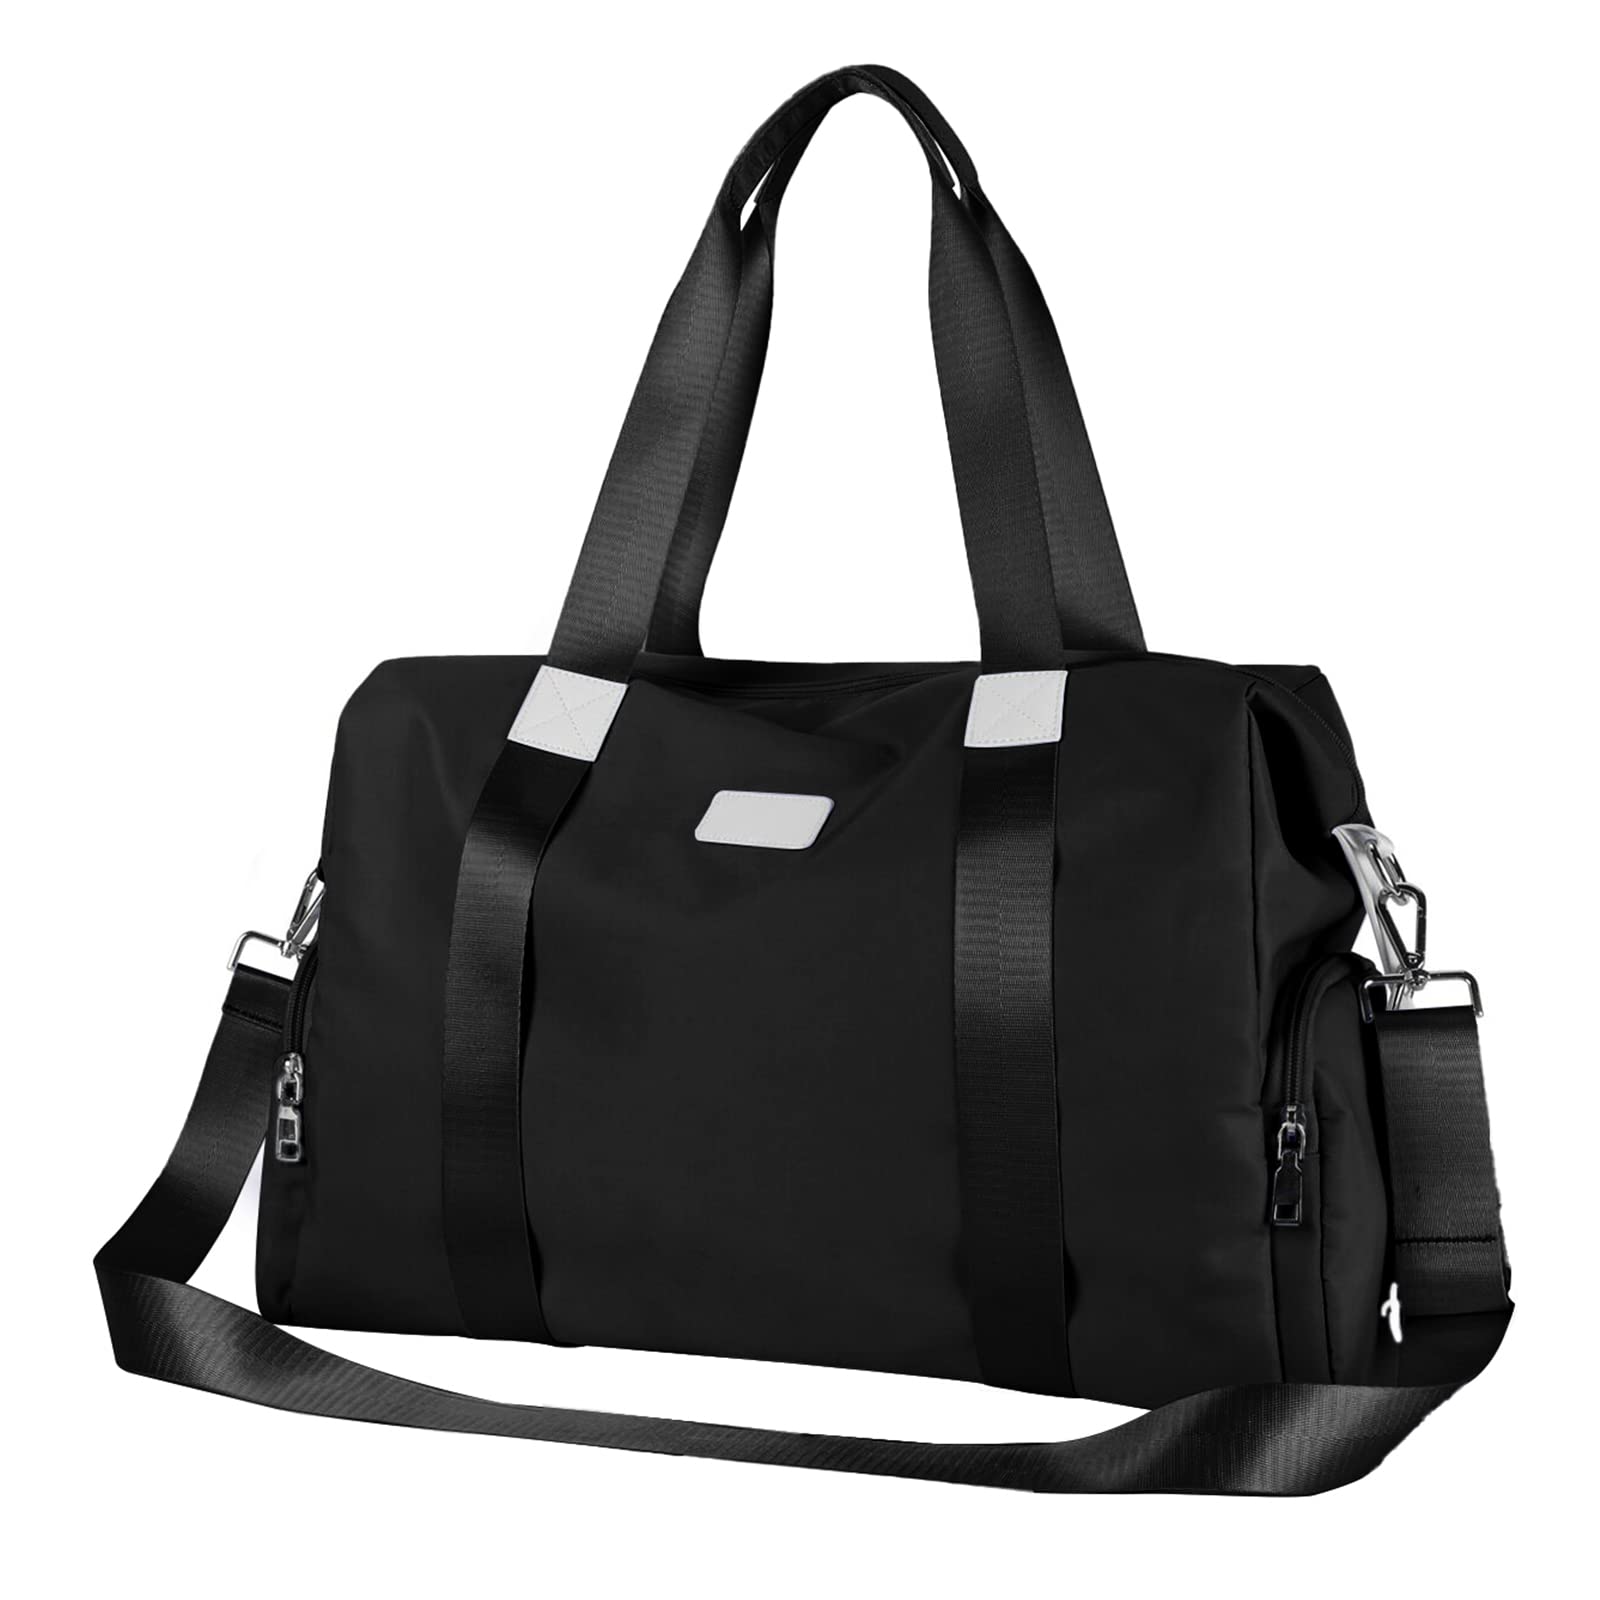 Gym Bag Travel Duffel Bag Sports Tote Bag for Women